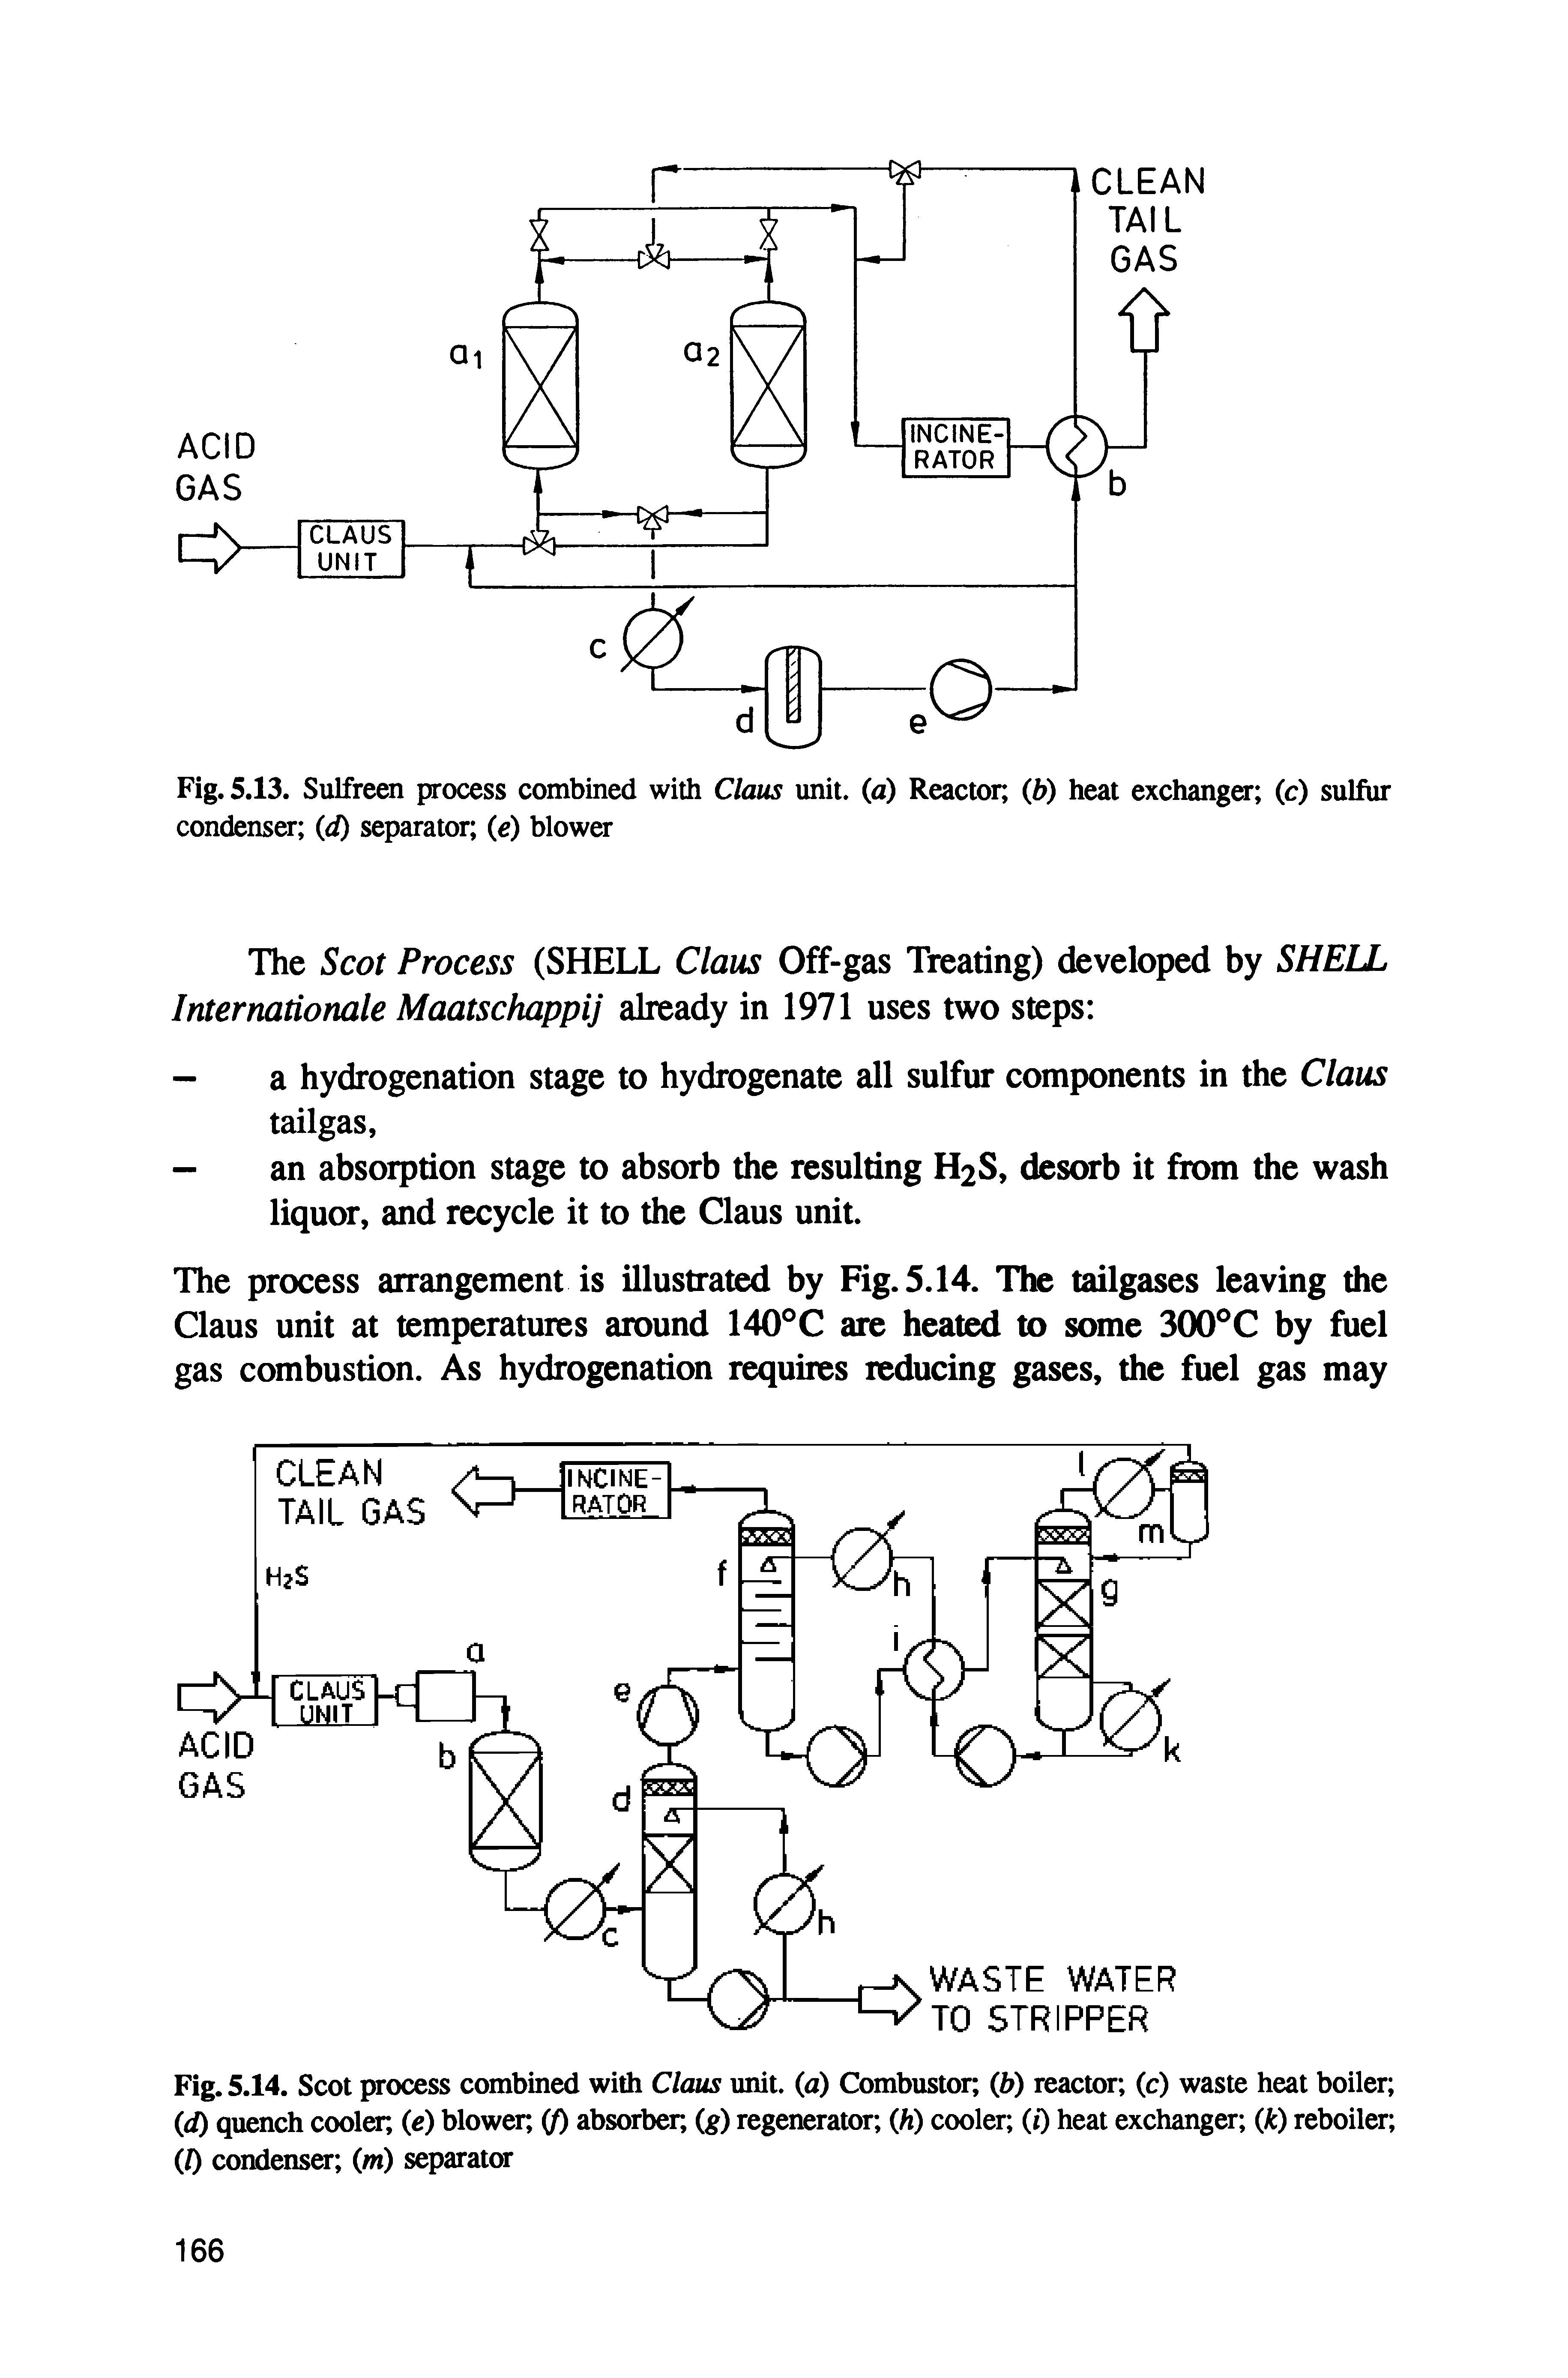 Fig. 5.14. Scot process combined with Claus unit, (a) Combustor (b) reactor (c) waste heat boiler (d) quench cooler, (e) blower, (/) absorber, (g) regenerator h) cooler, (0 heat exchanger (k) reboiler (0 condenser (m) separator...